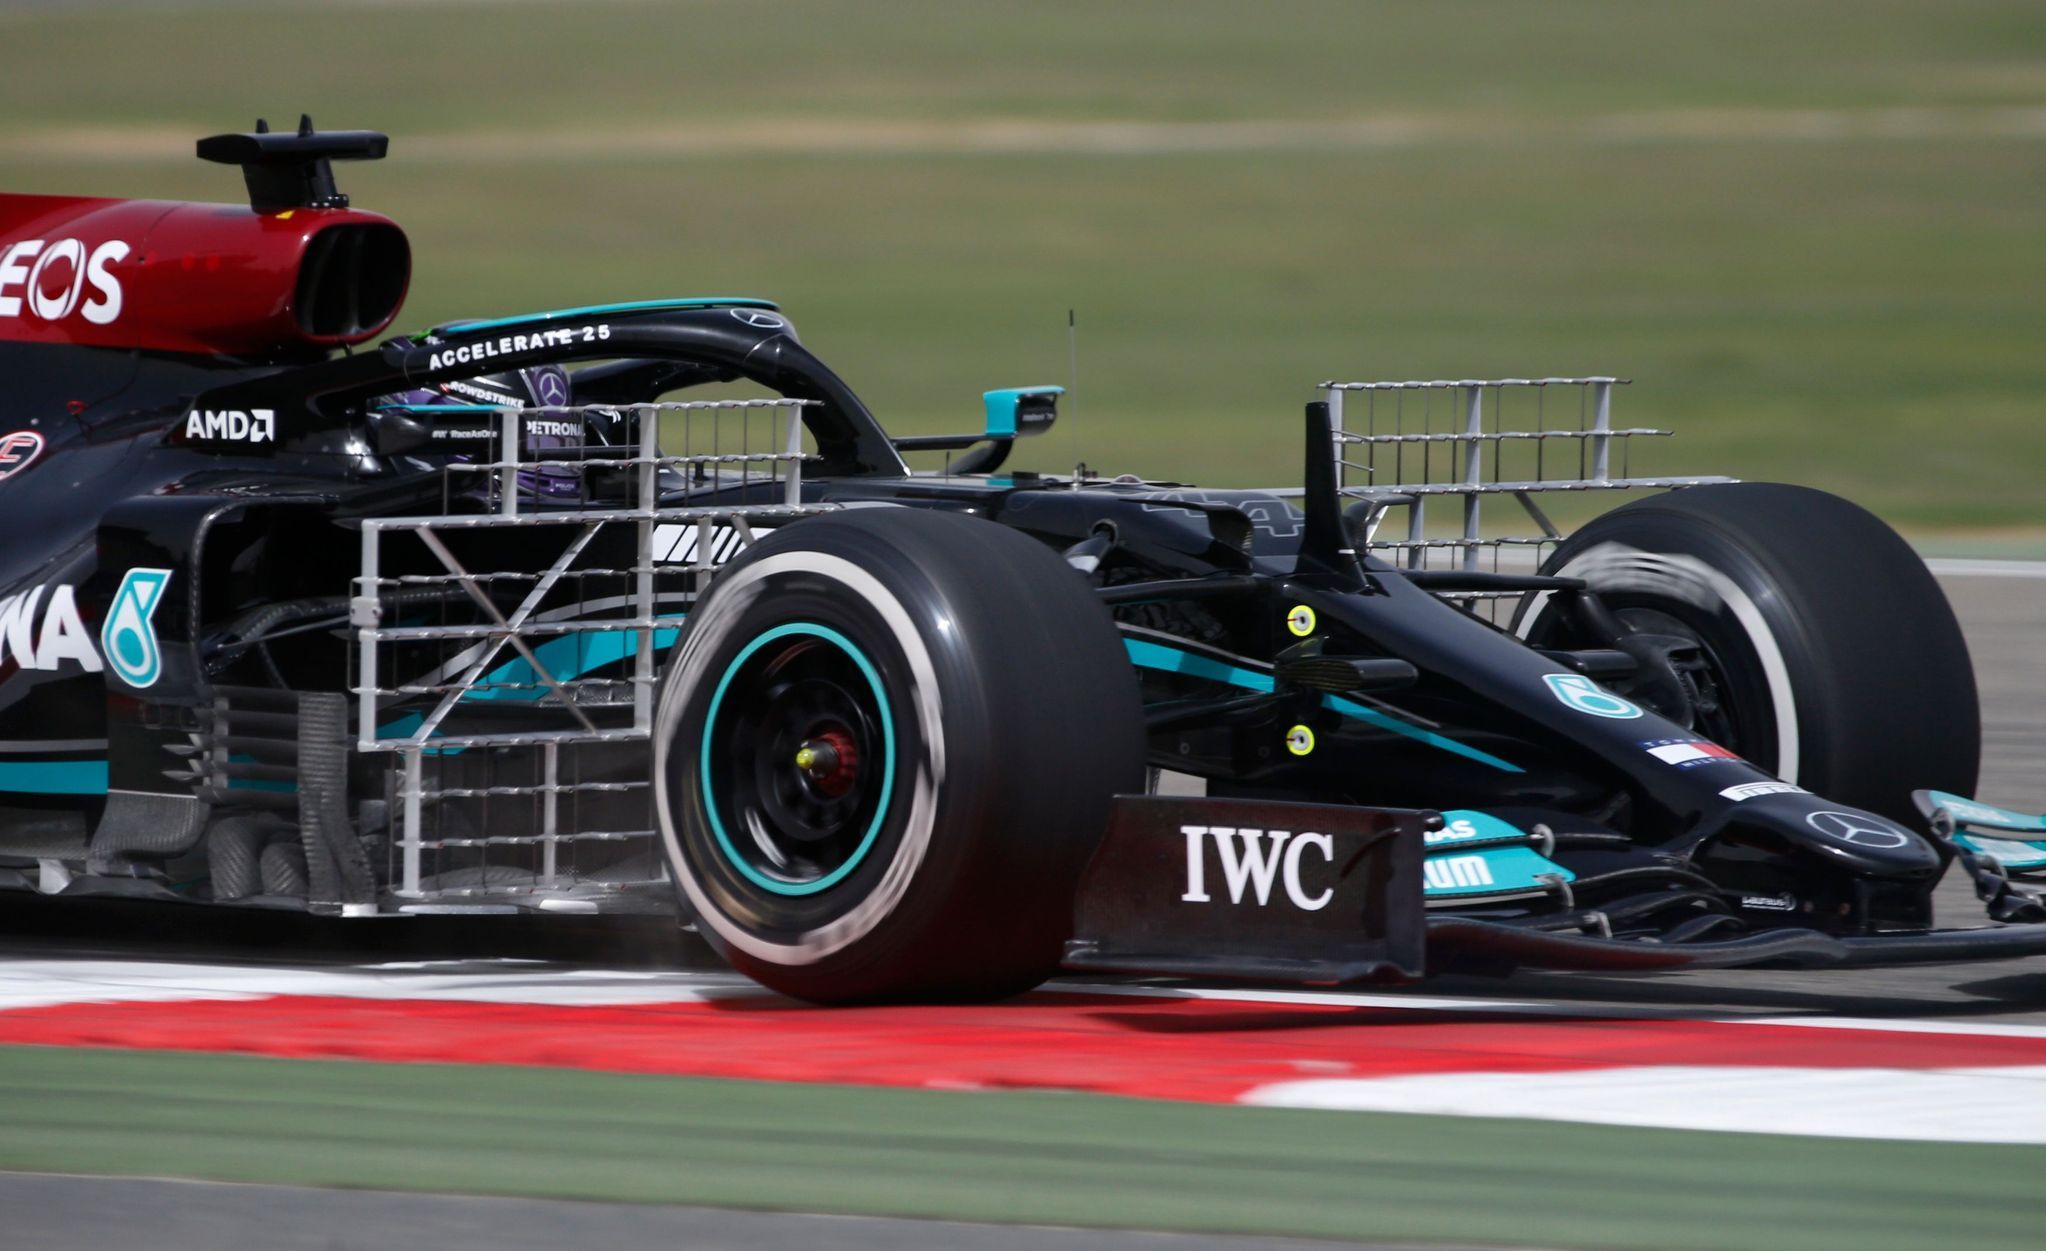 Testy F1 v Bahrajnu 2021: Lewis Hamilton, Mercedes